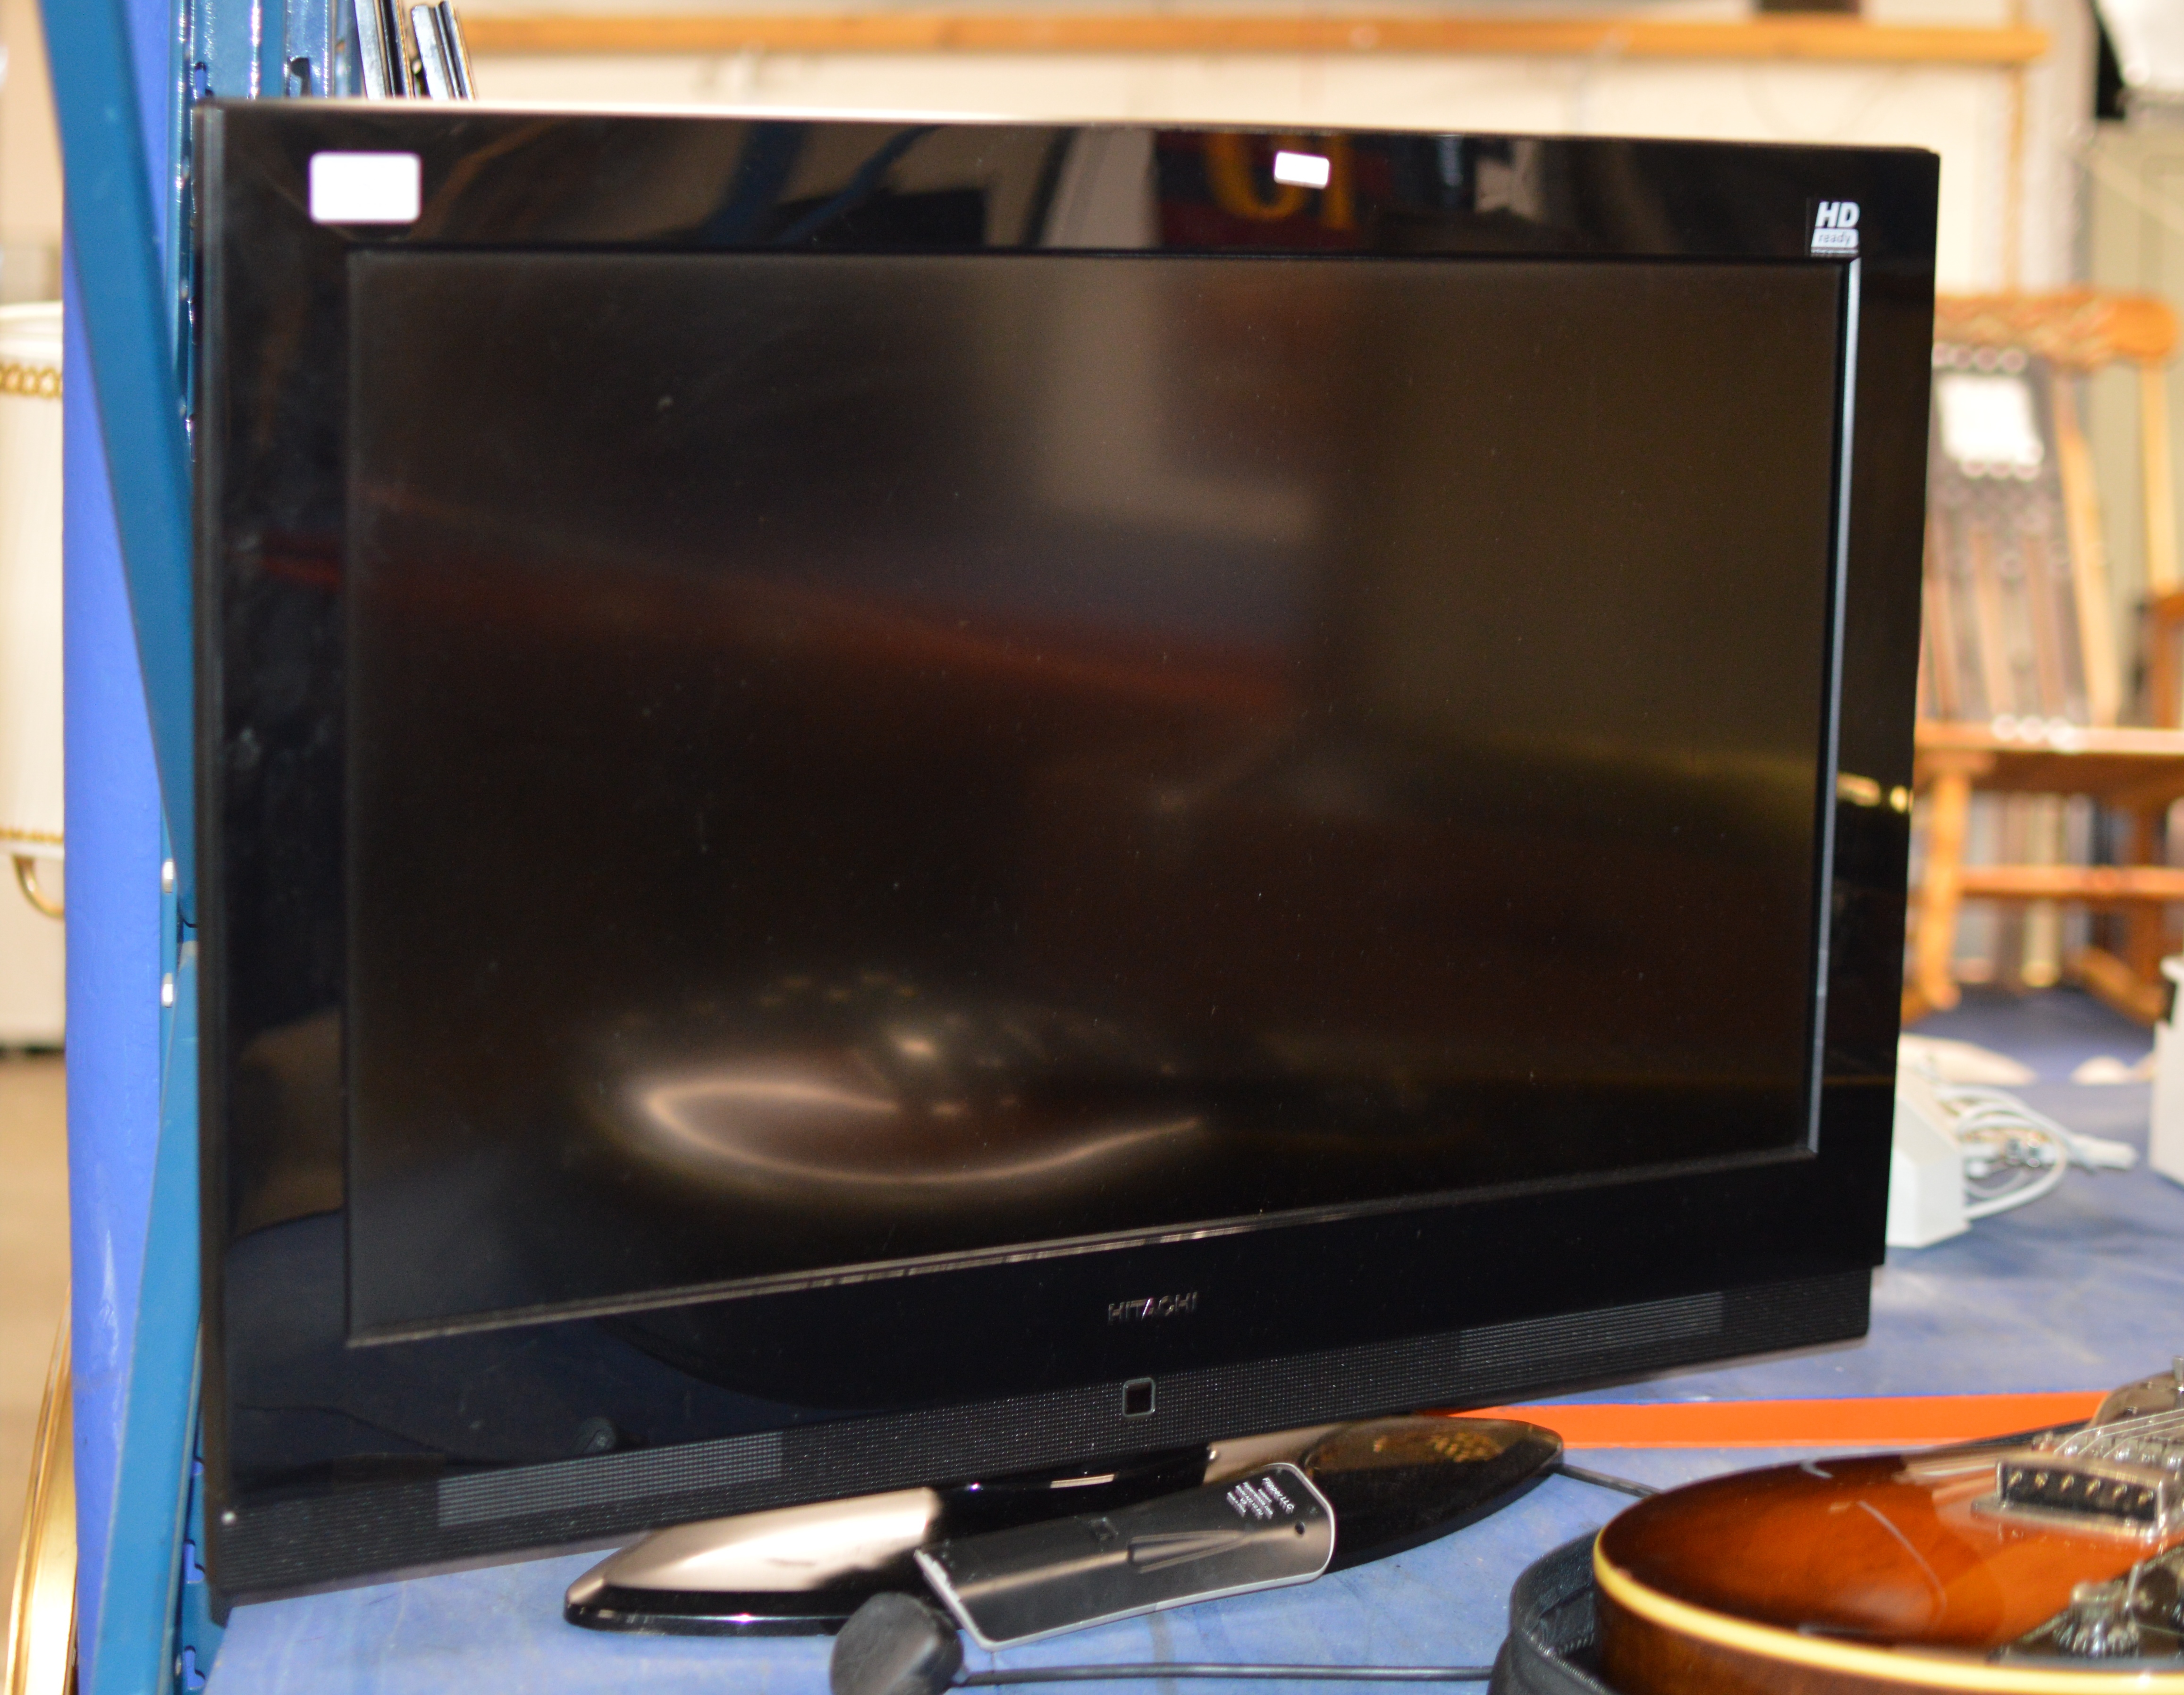 HITACHI 32" LCD TV WITH REMOTE